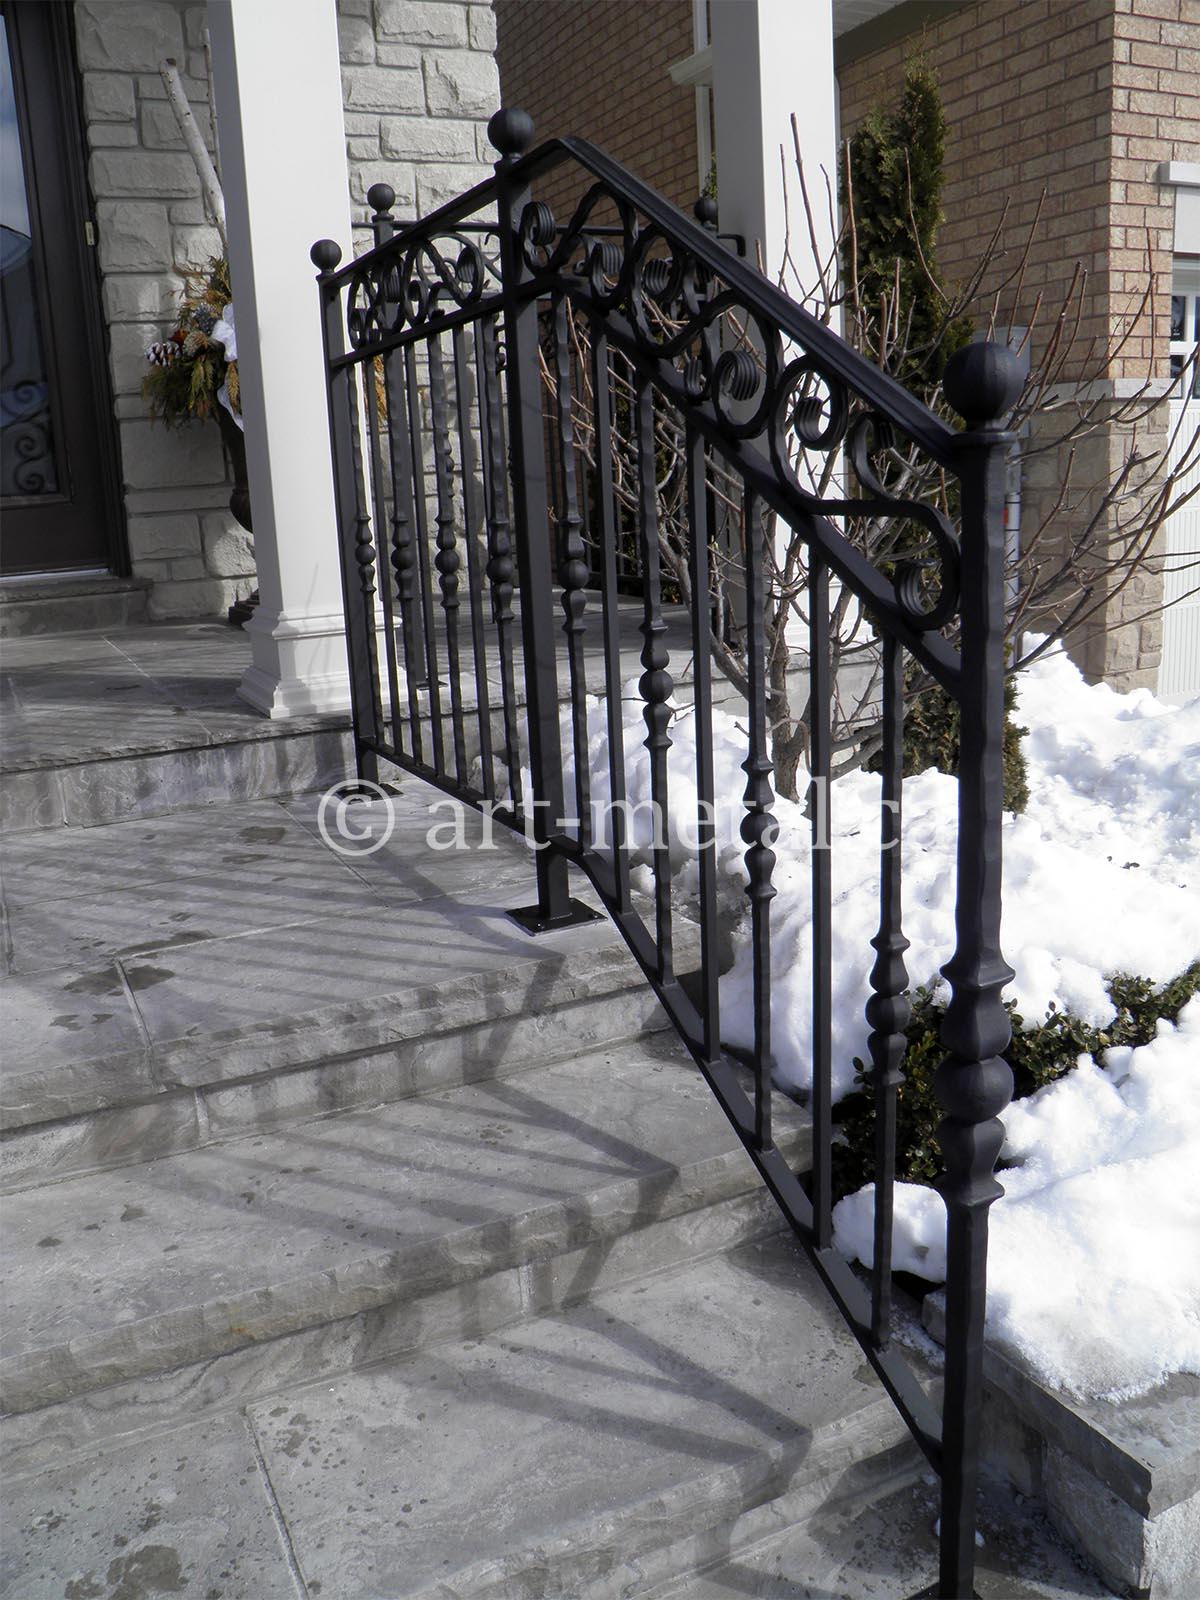 Exterior Railings & Handrails for Stairs, Porches, Decks